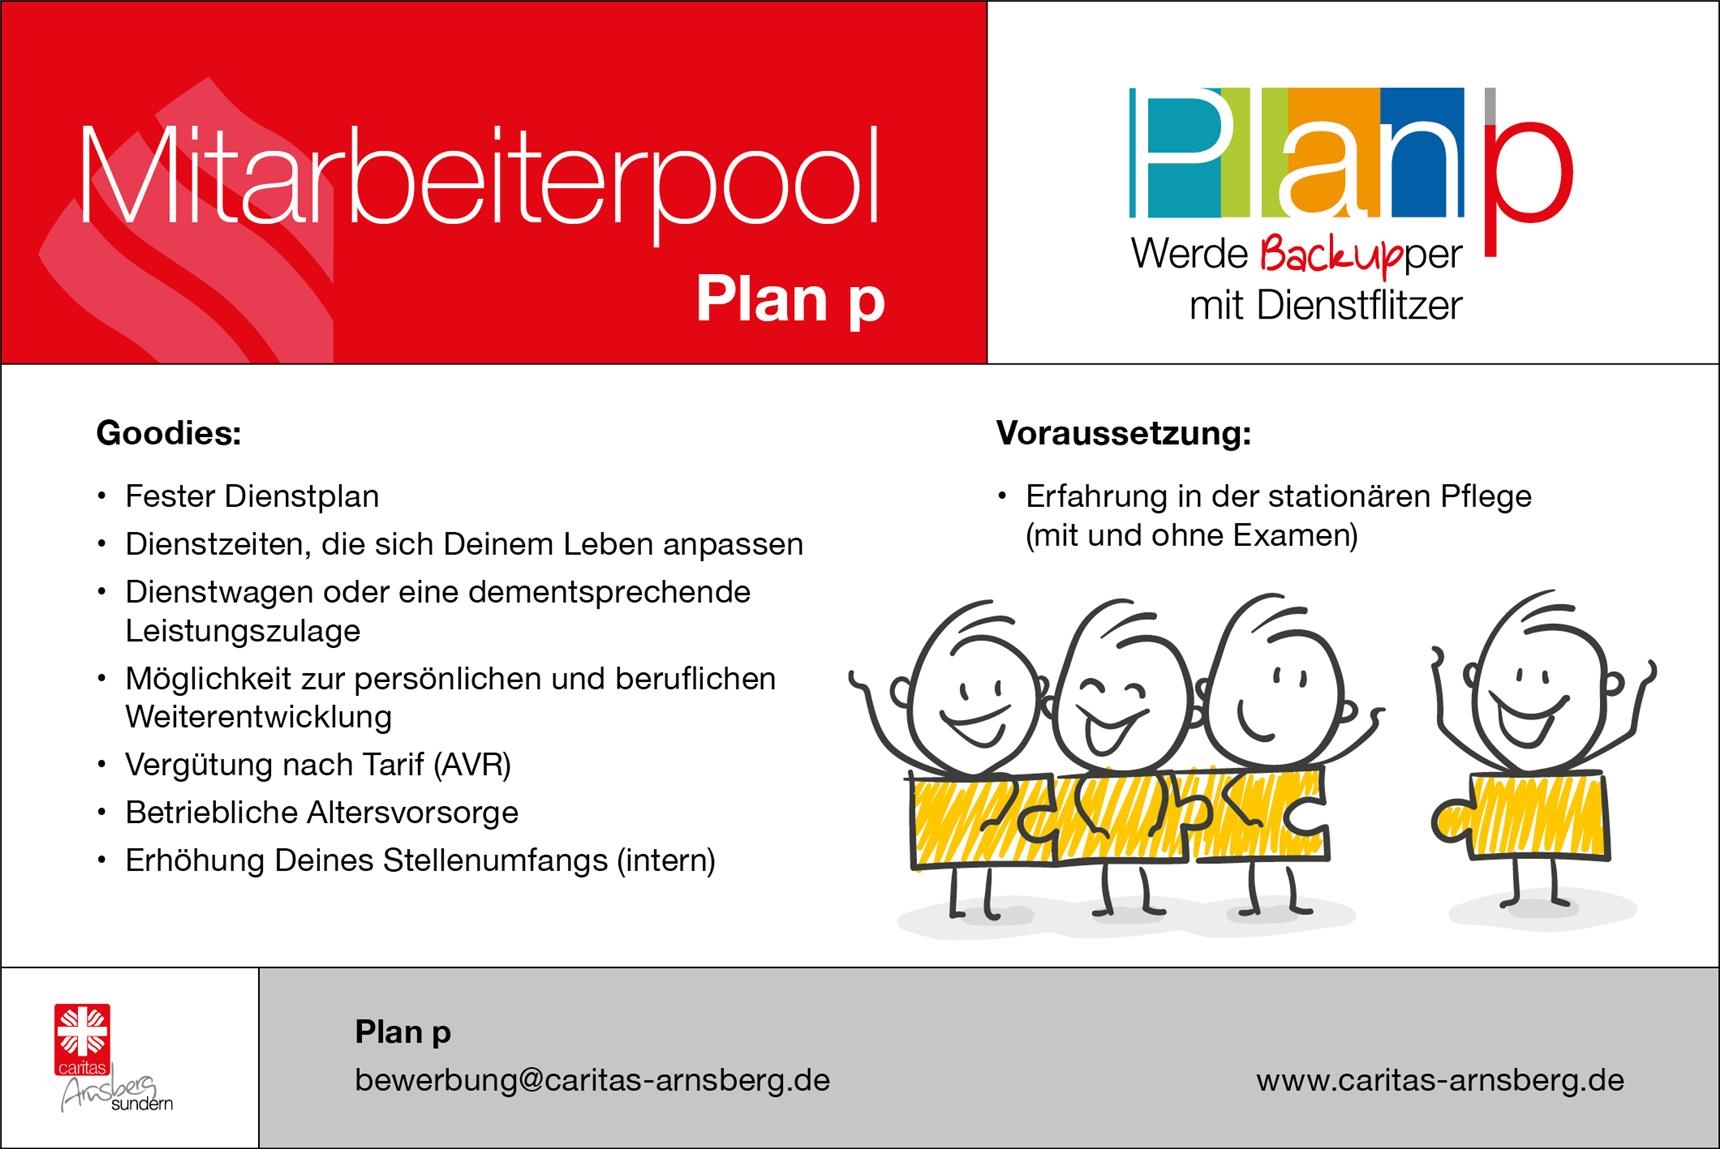 Mitarbeiterpool Plan P